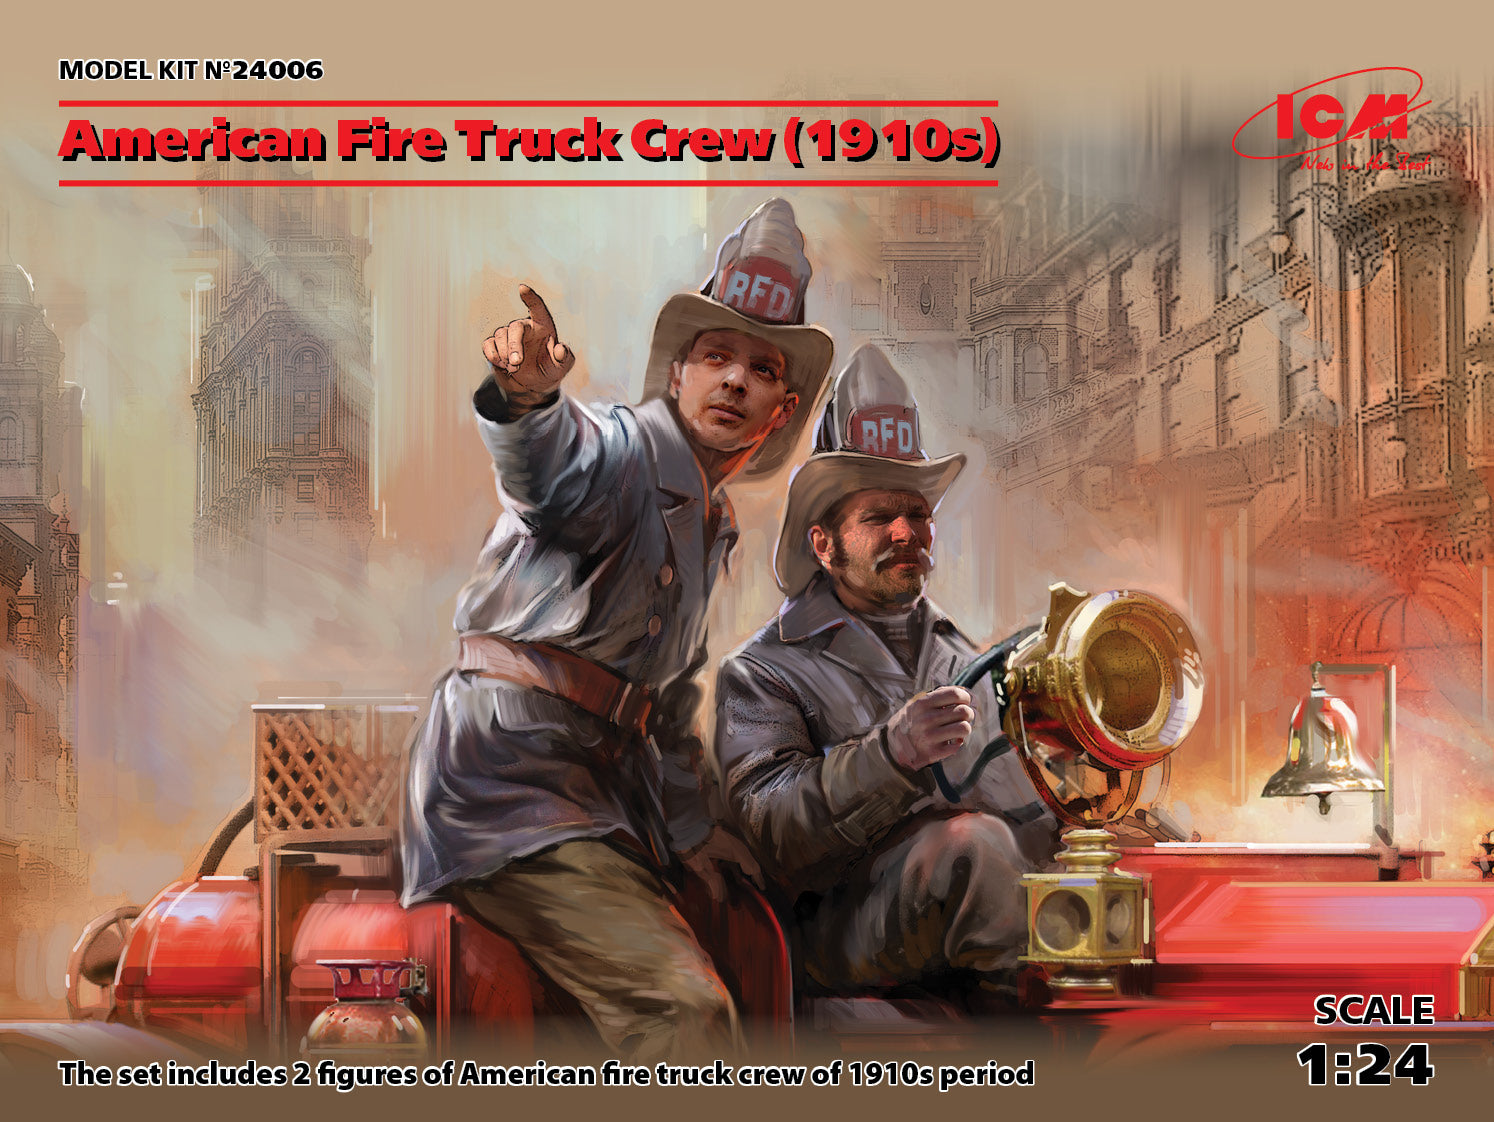 ICM 24006 - 1/24 - American Fire Truck Crew (1910s)